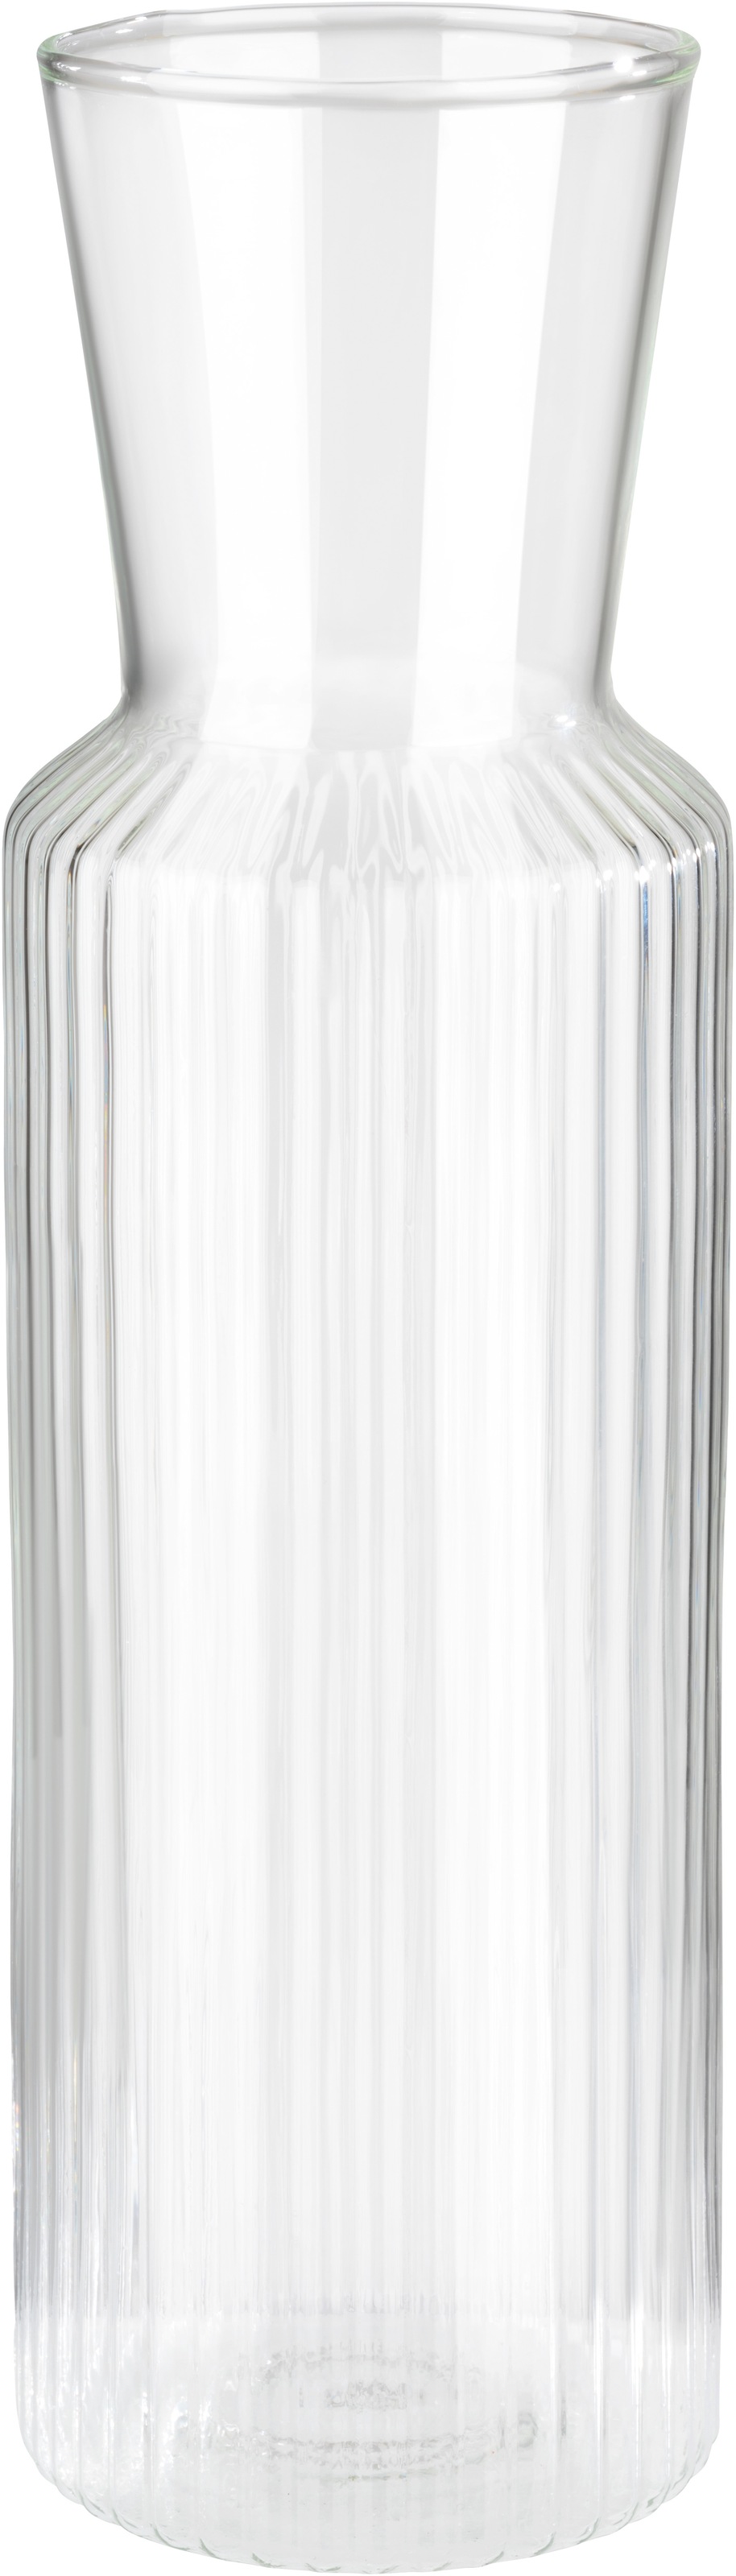 APS Karaffe »Lines«, 900 ml, abnehmbarer Kork-Deckel